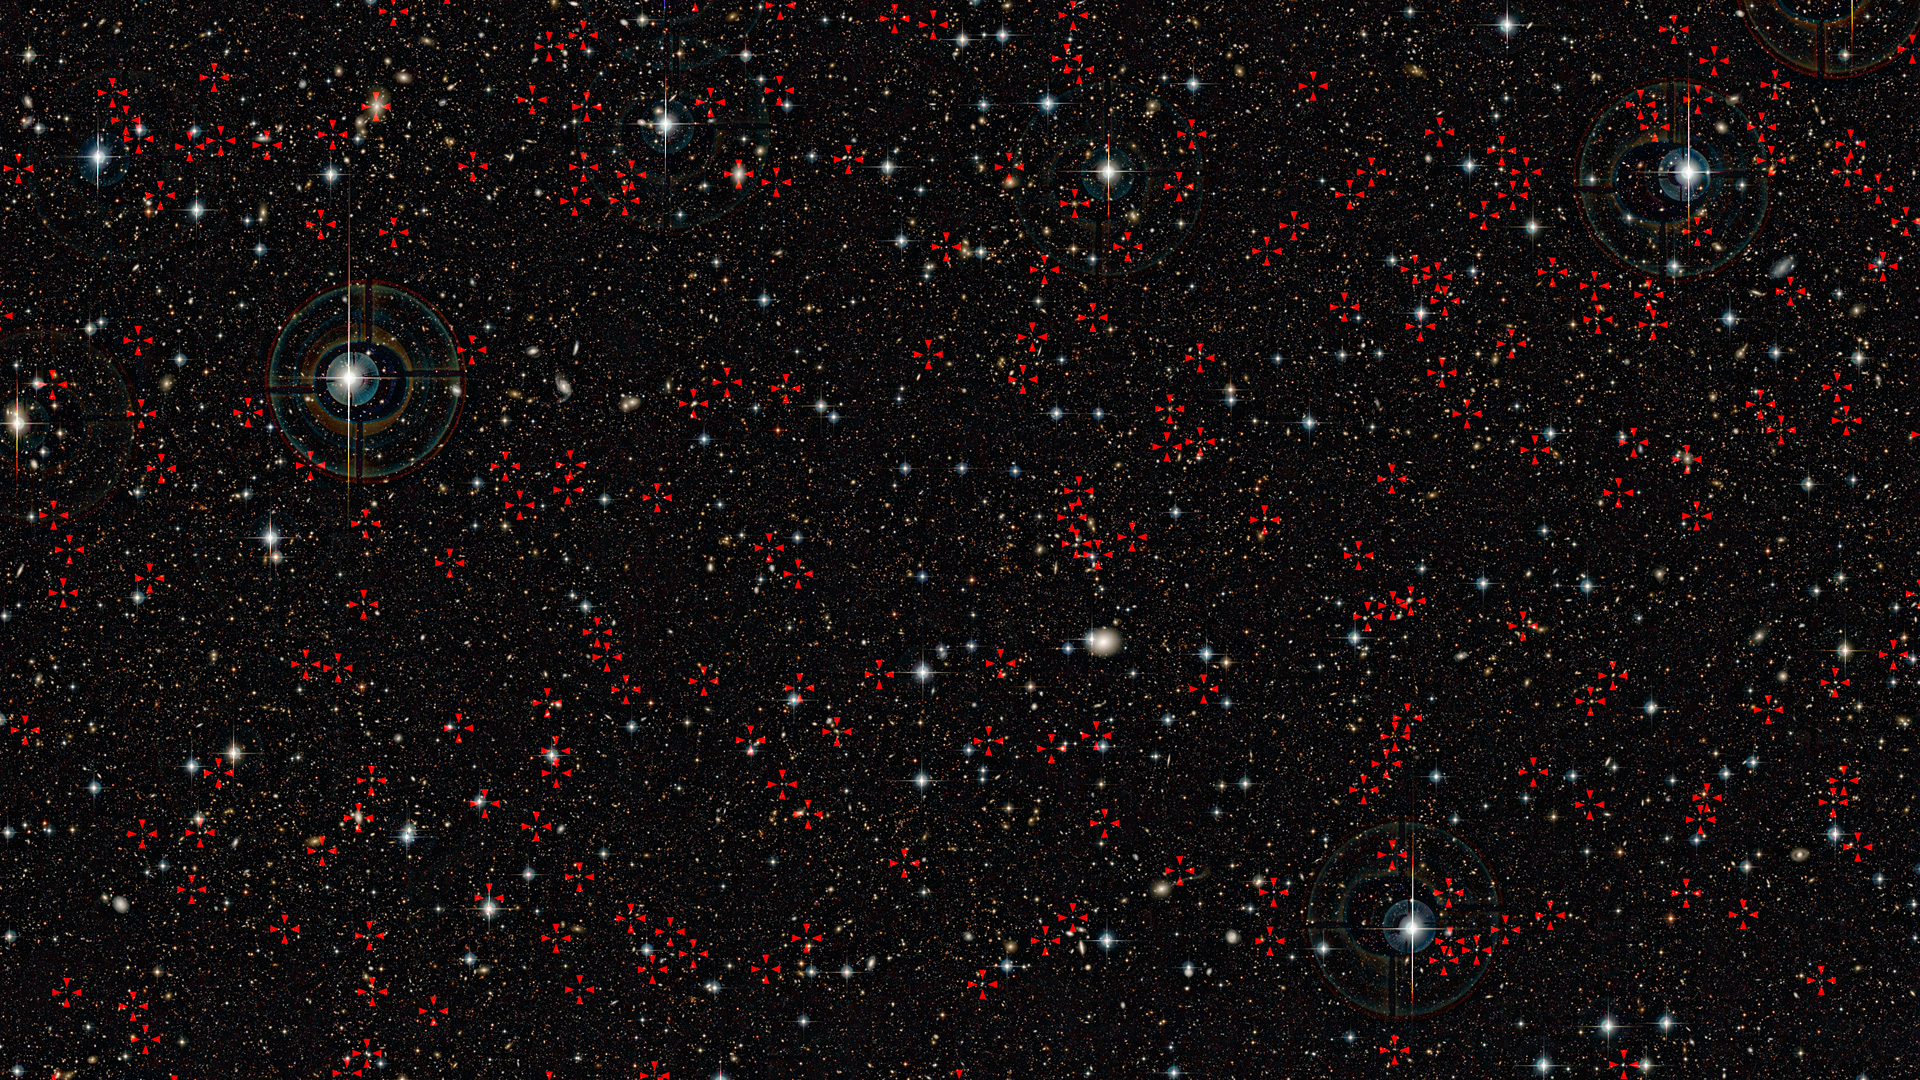 File Wallpaper Of The Cosmos Field Jpg Wikimedia Mons